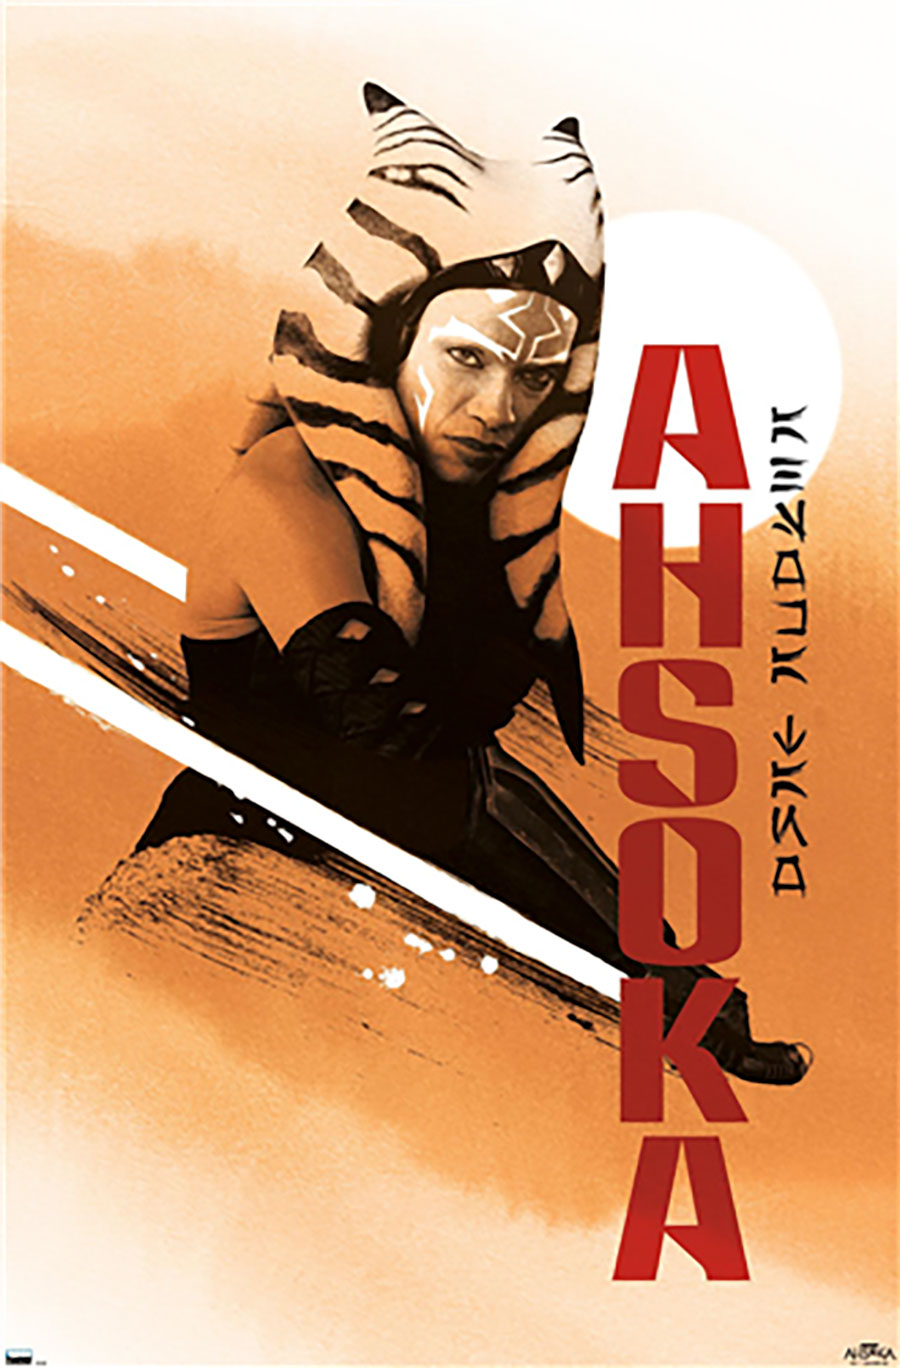 Star Wars Ahsoka Double Lightsabers Poster